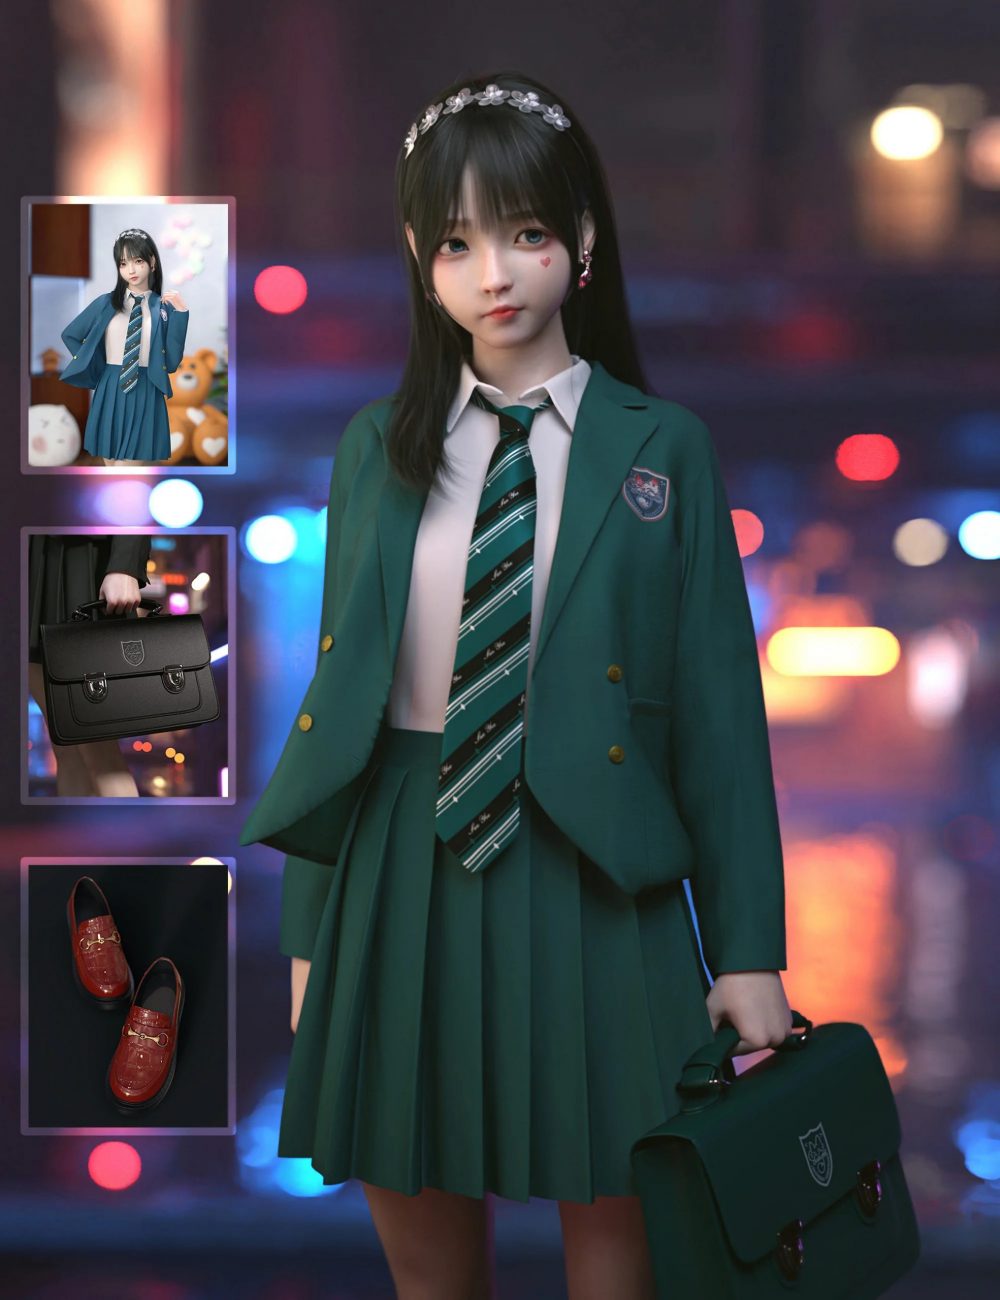 dForce SU Japan School Uniform Suit for Genesis 8, 8.1, and 9